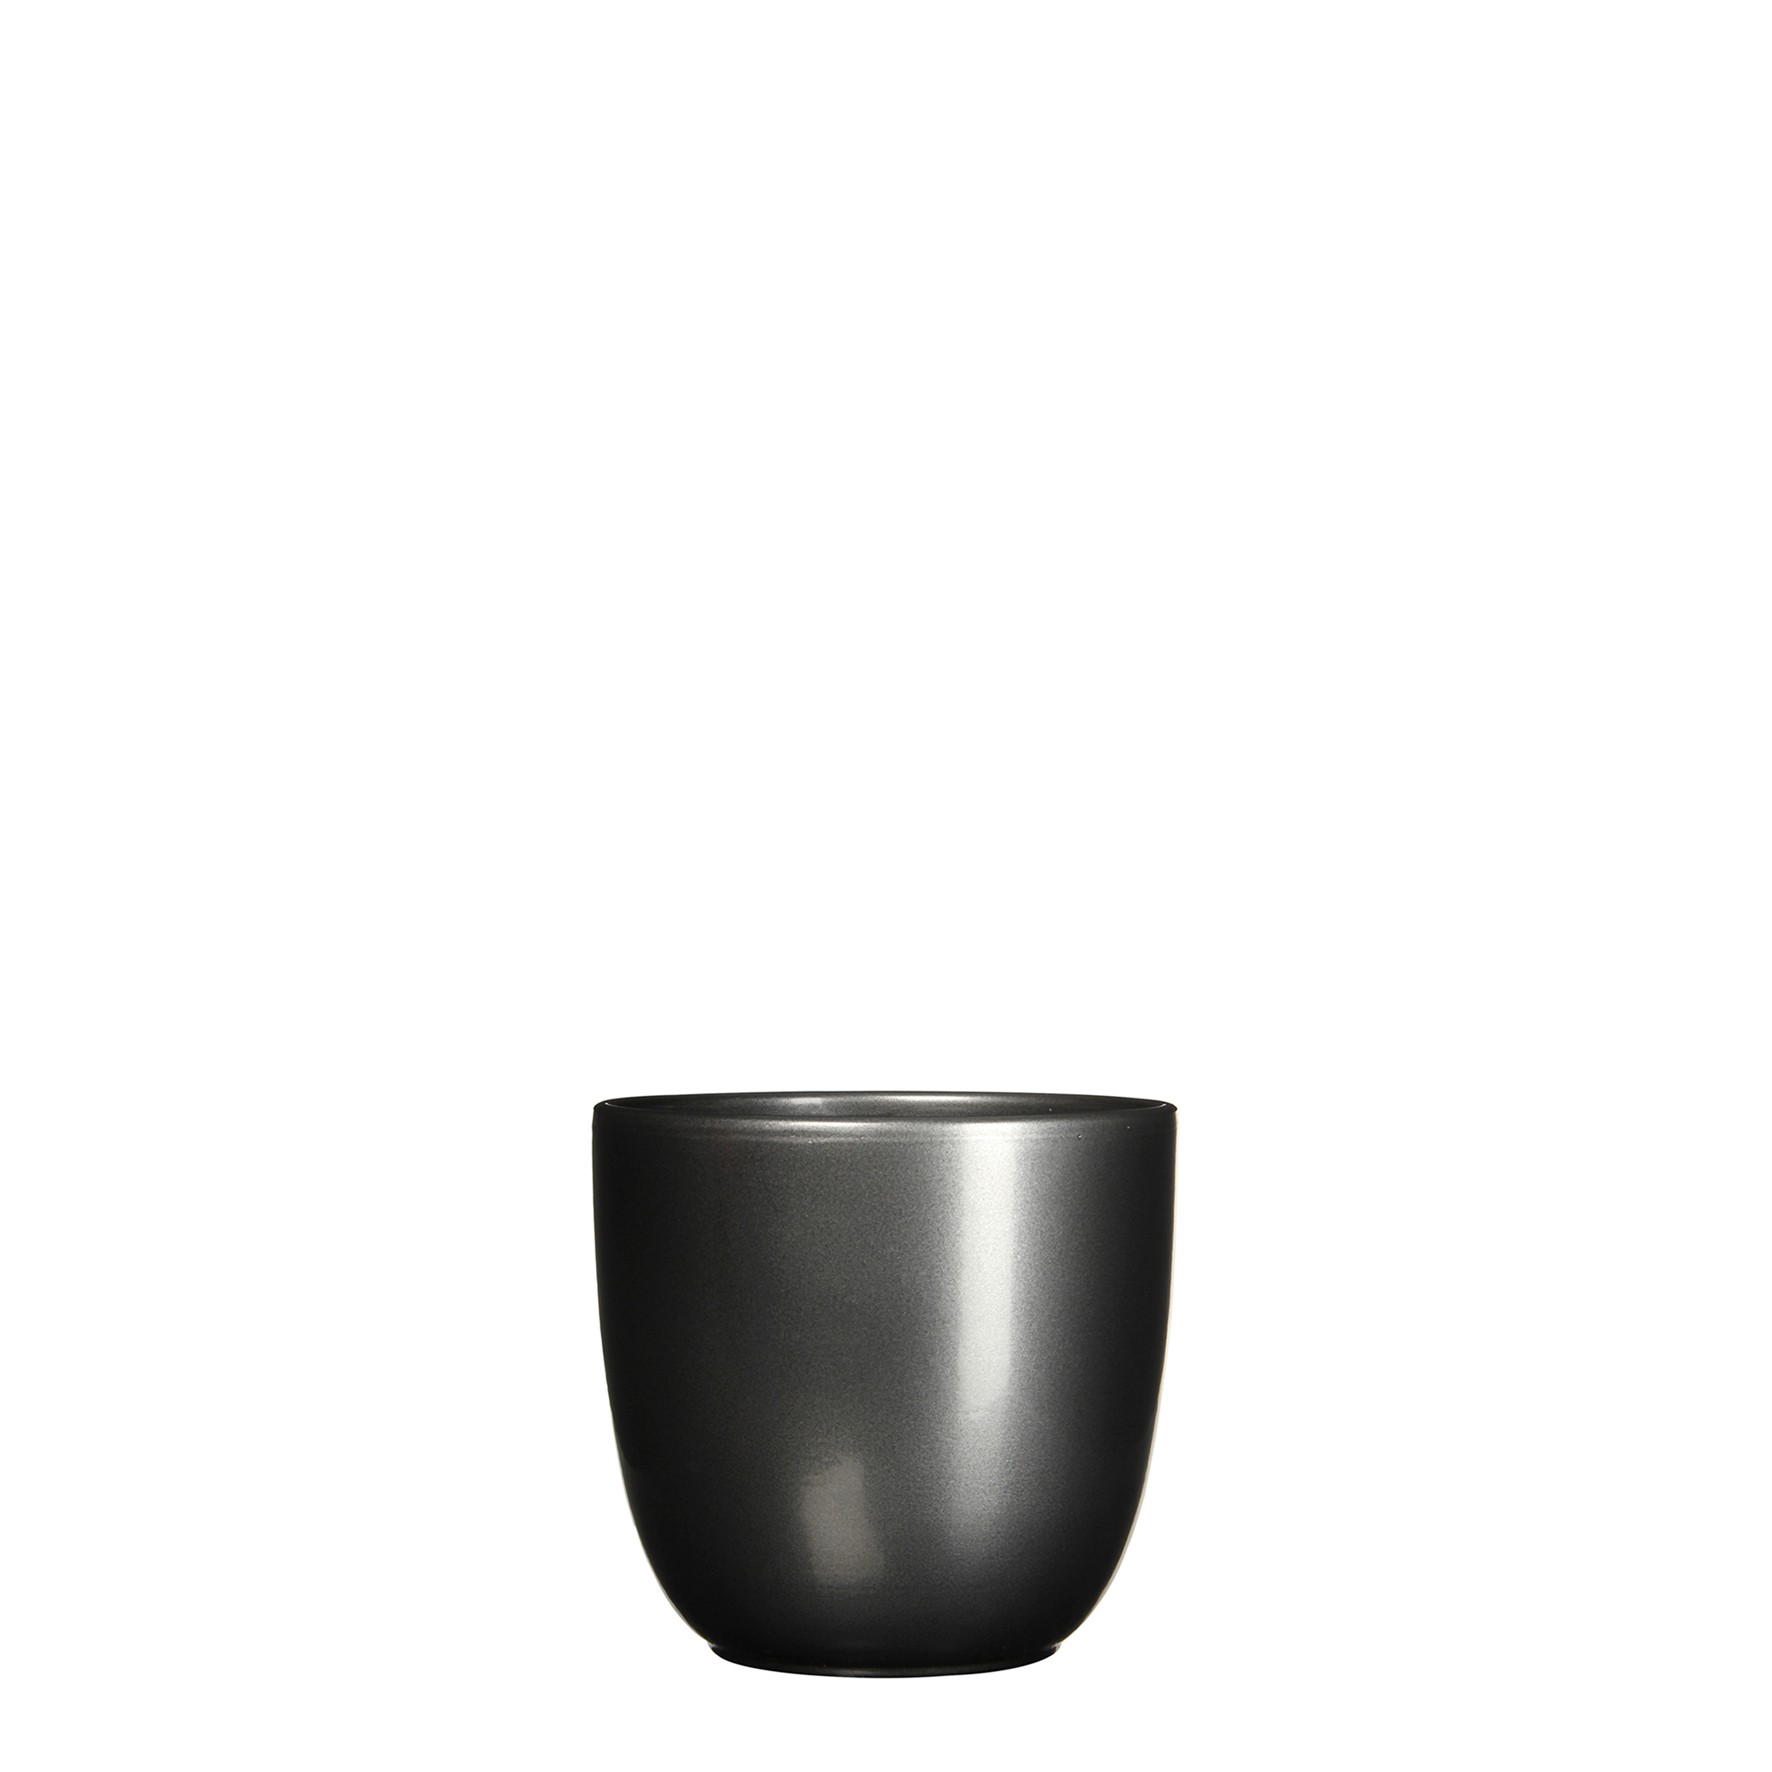 Bloempot Pot rond es/10.5 tusca 11 x 12 cm antraciet Mica - Mica Decorations